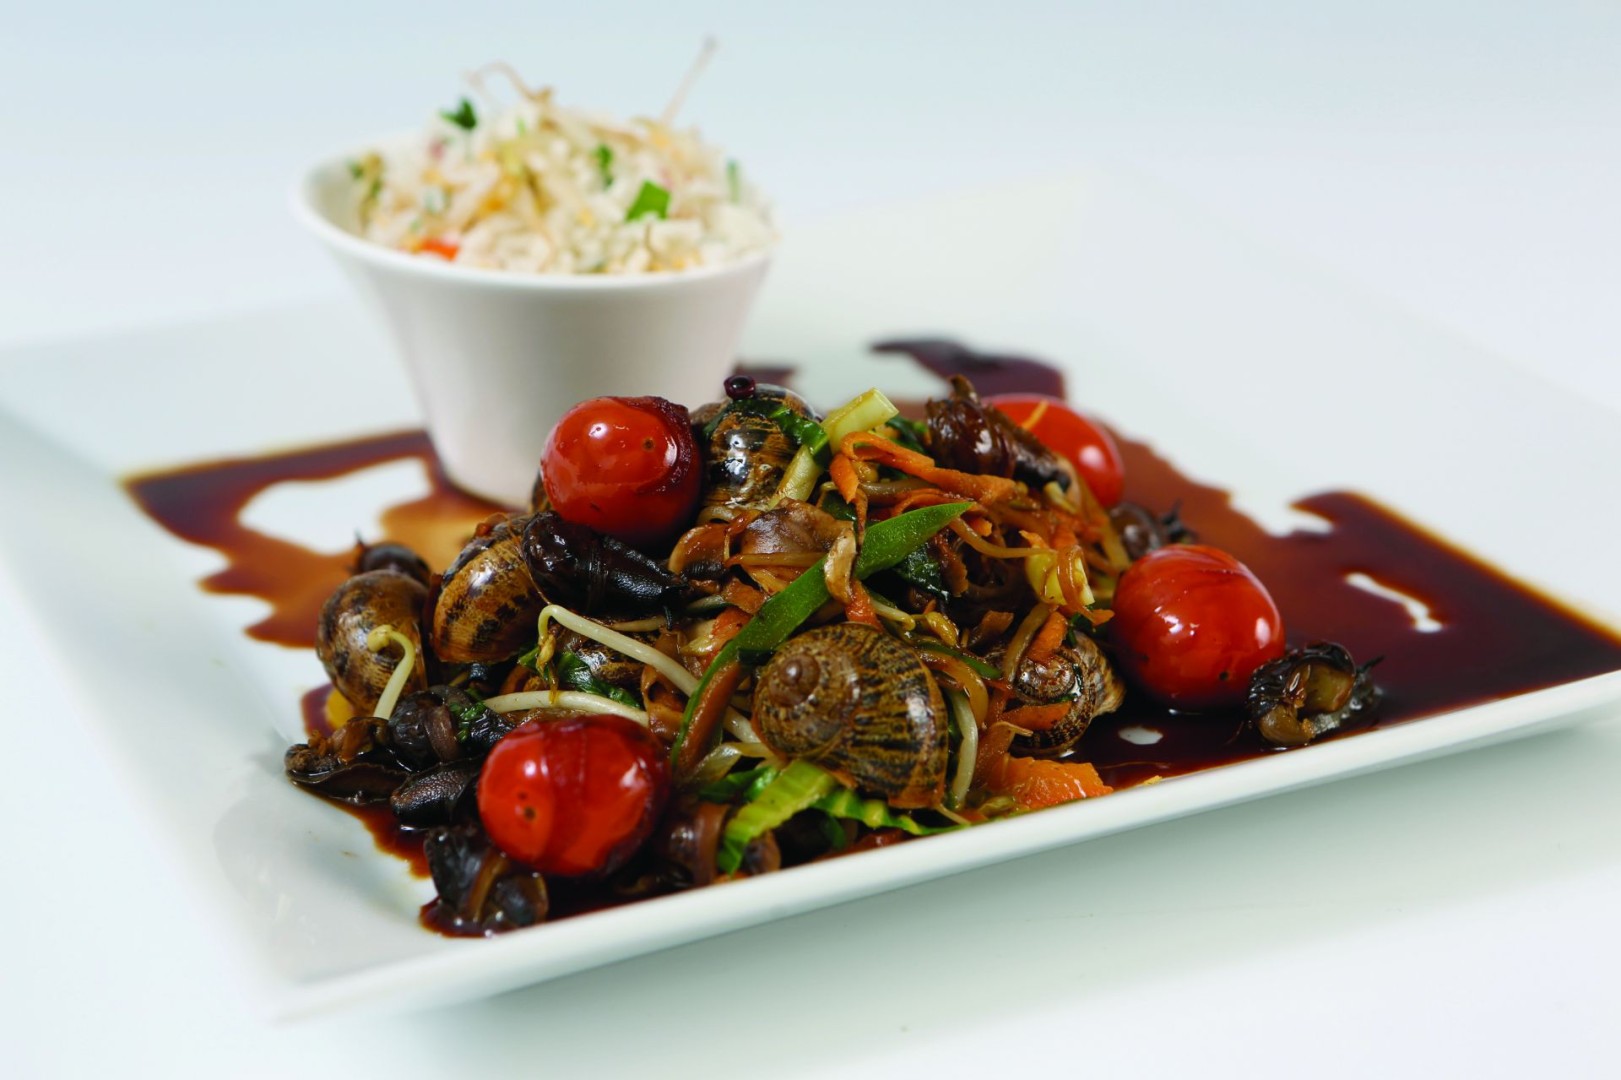 Snail Chop Suey with oriental rice